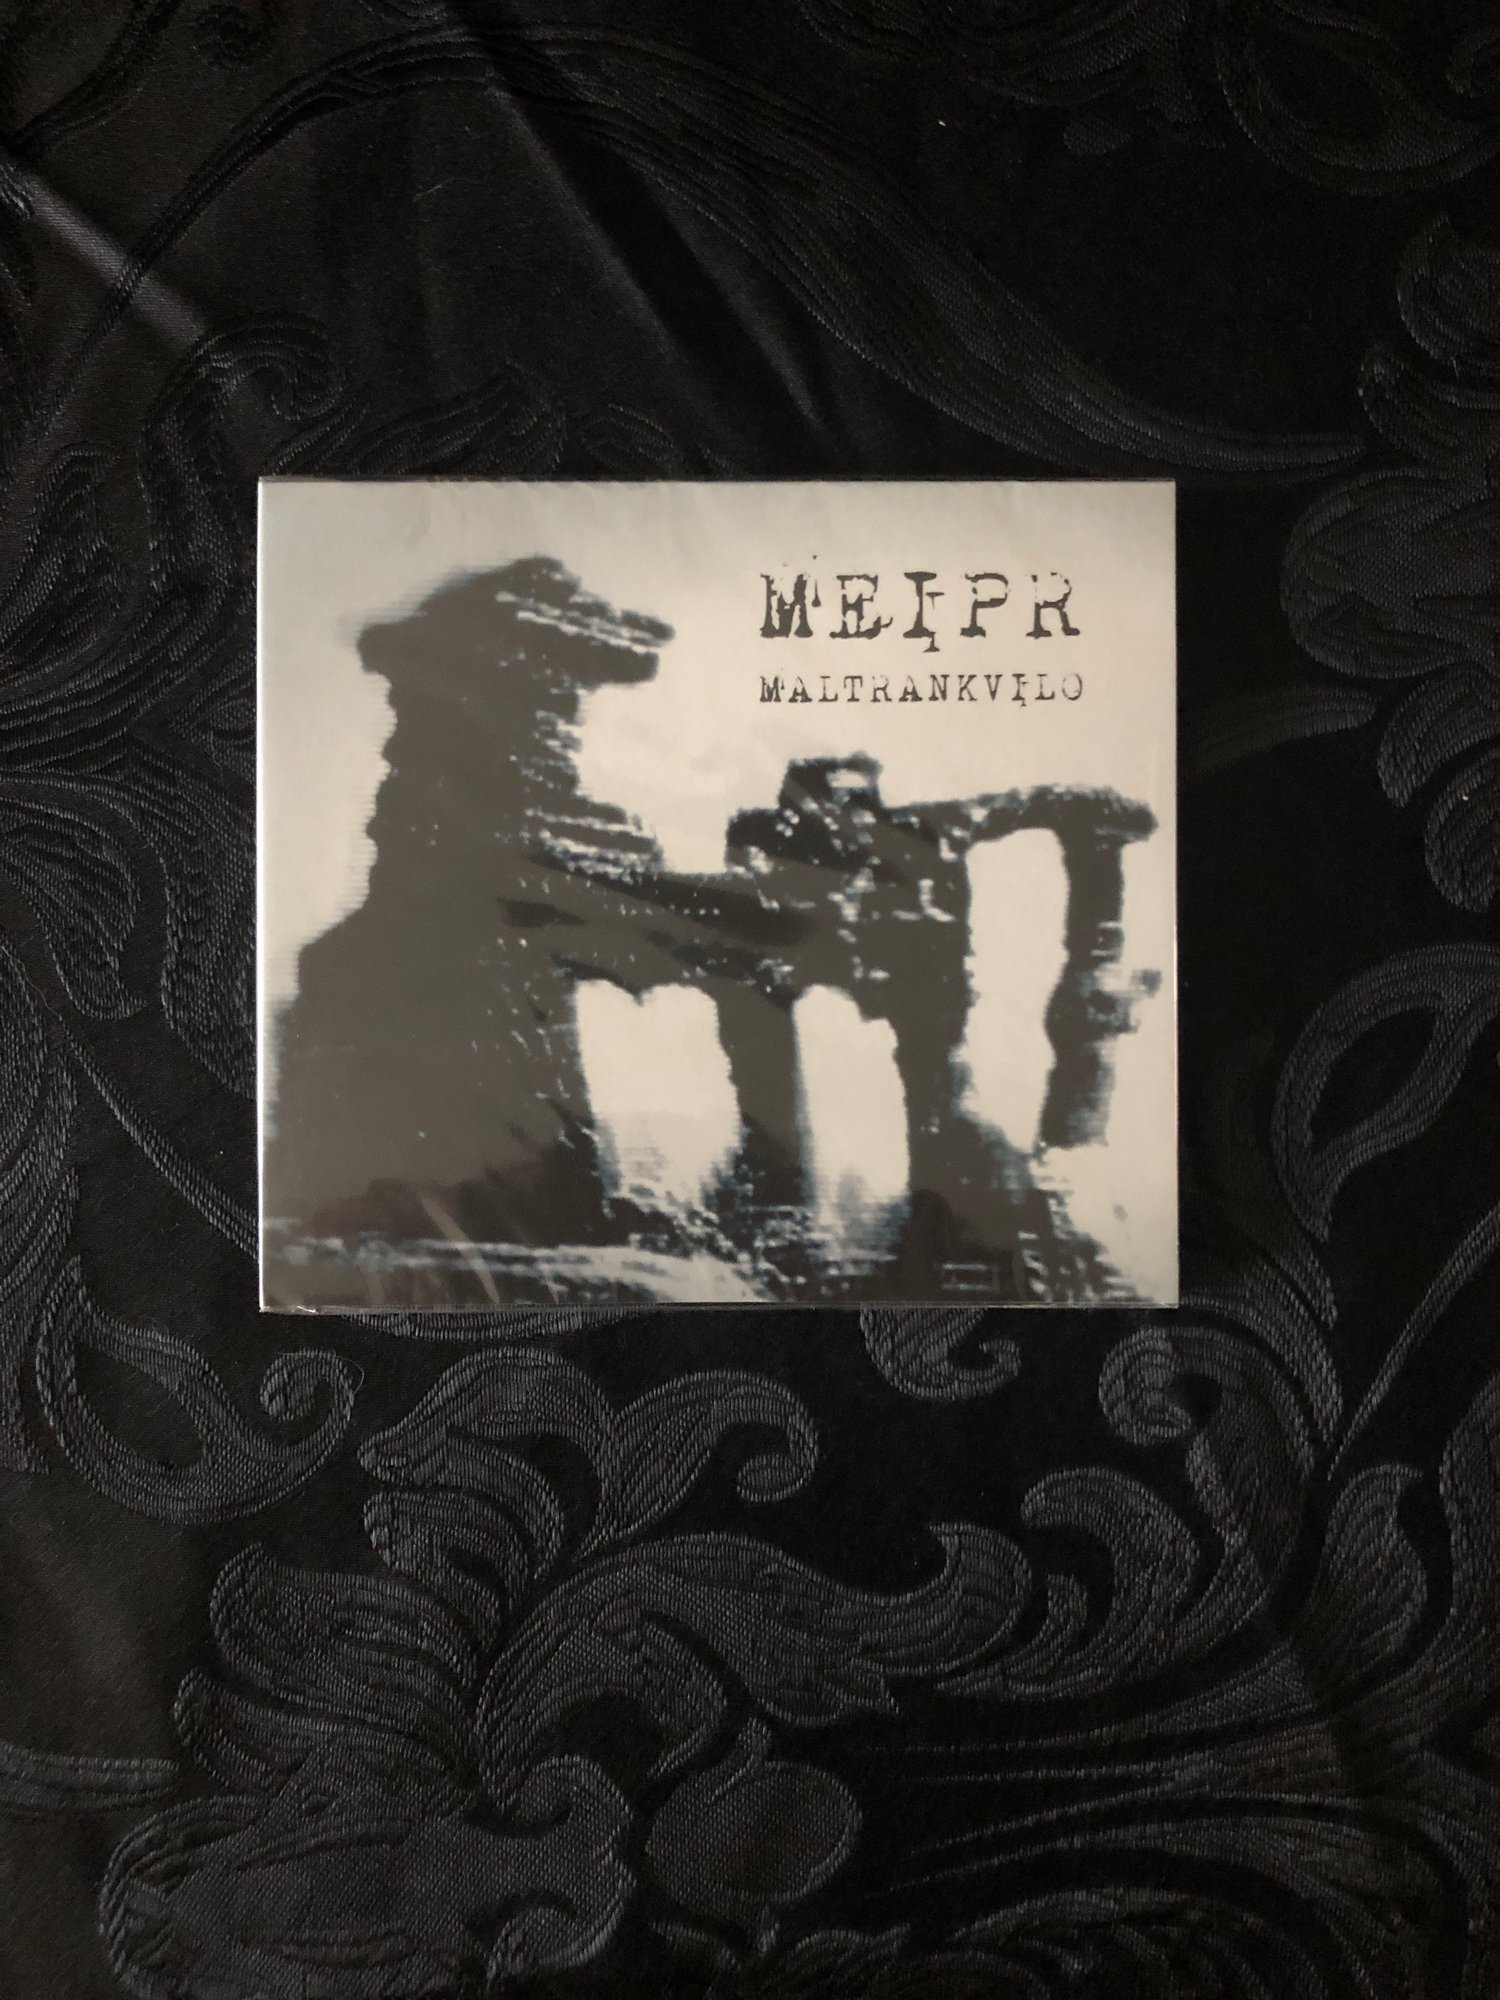 Meipr - Maltrankvilo CD (Alvaret Tape Rekordings)